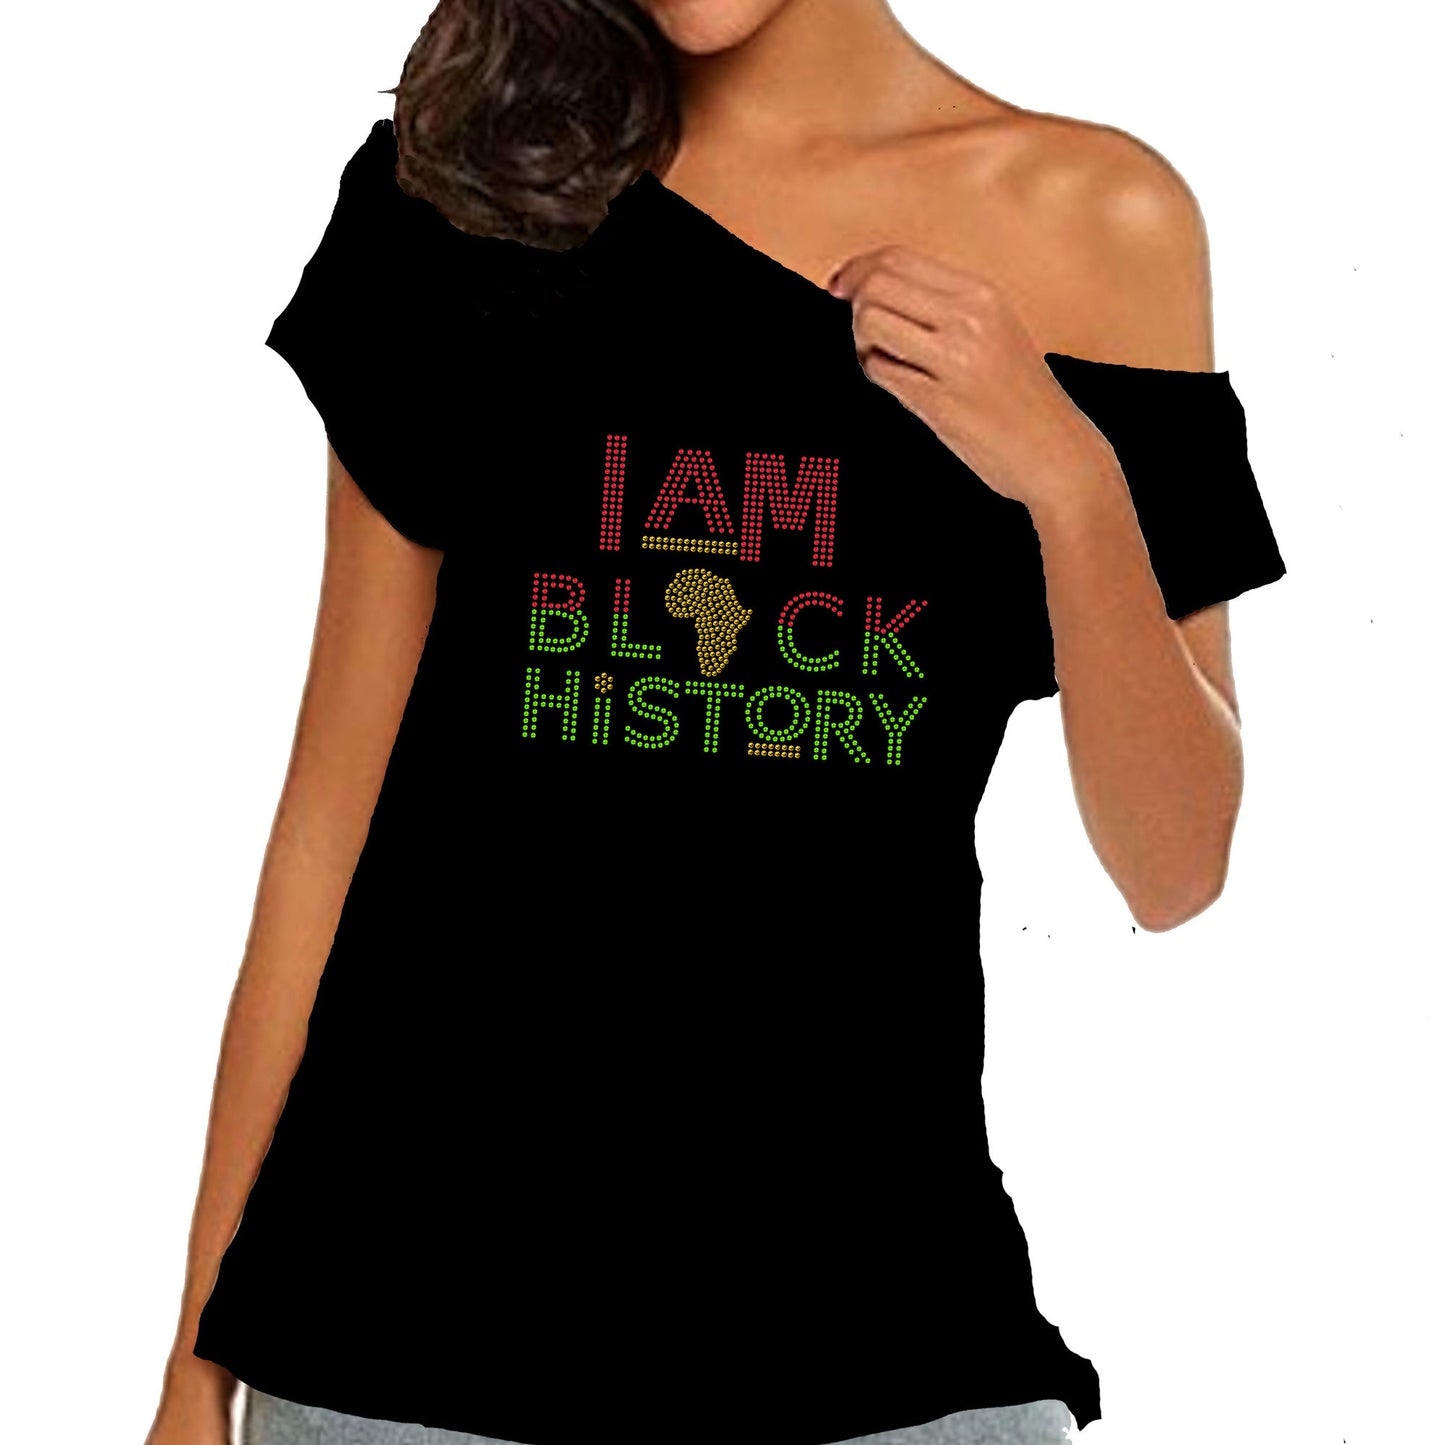 I Am Black History Rhinestone Off Shoulder T Shirt